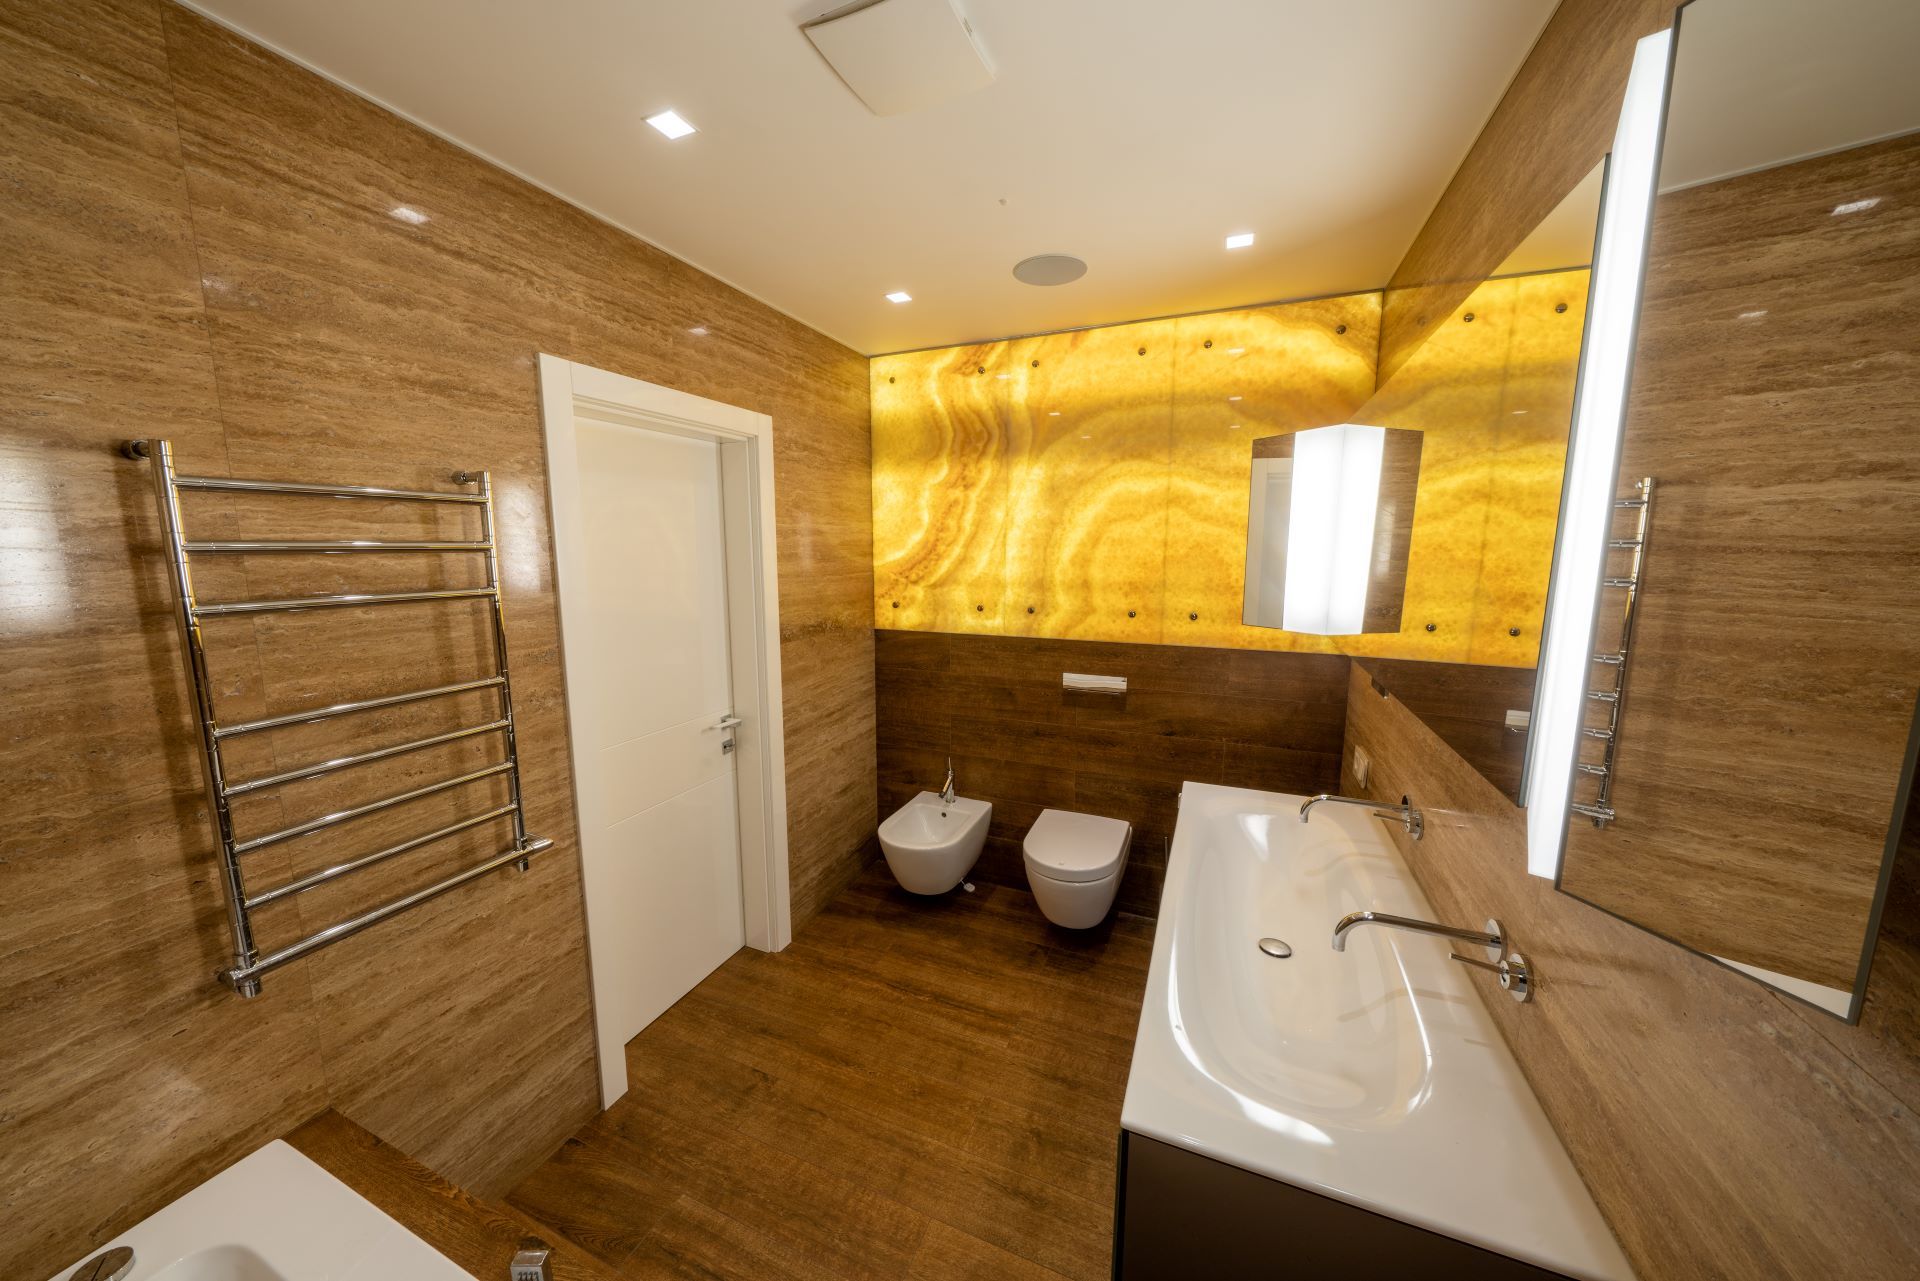 Luxury bathroom vanity. High angle view of the luxury bathroom with wooden walls and floor.